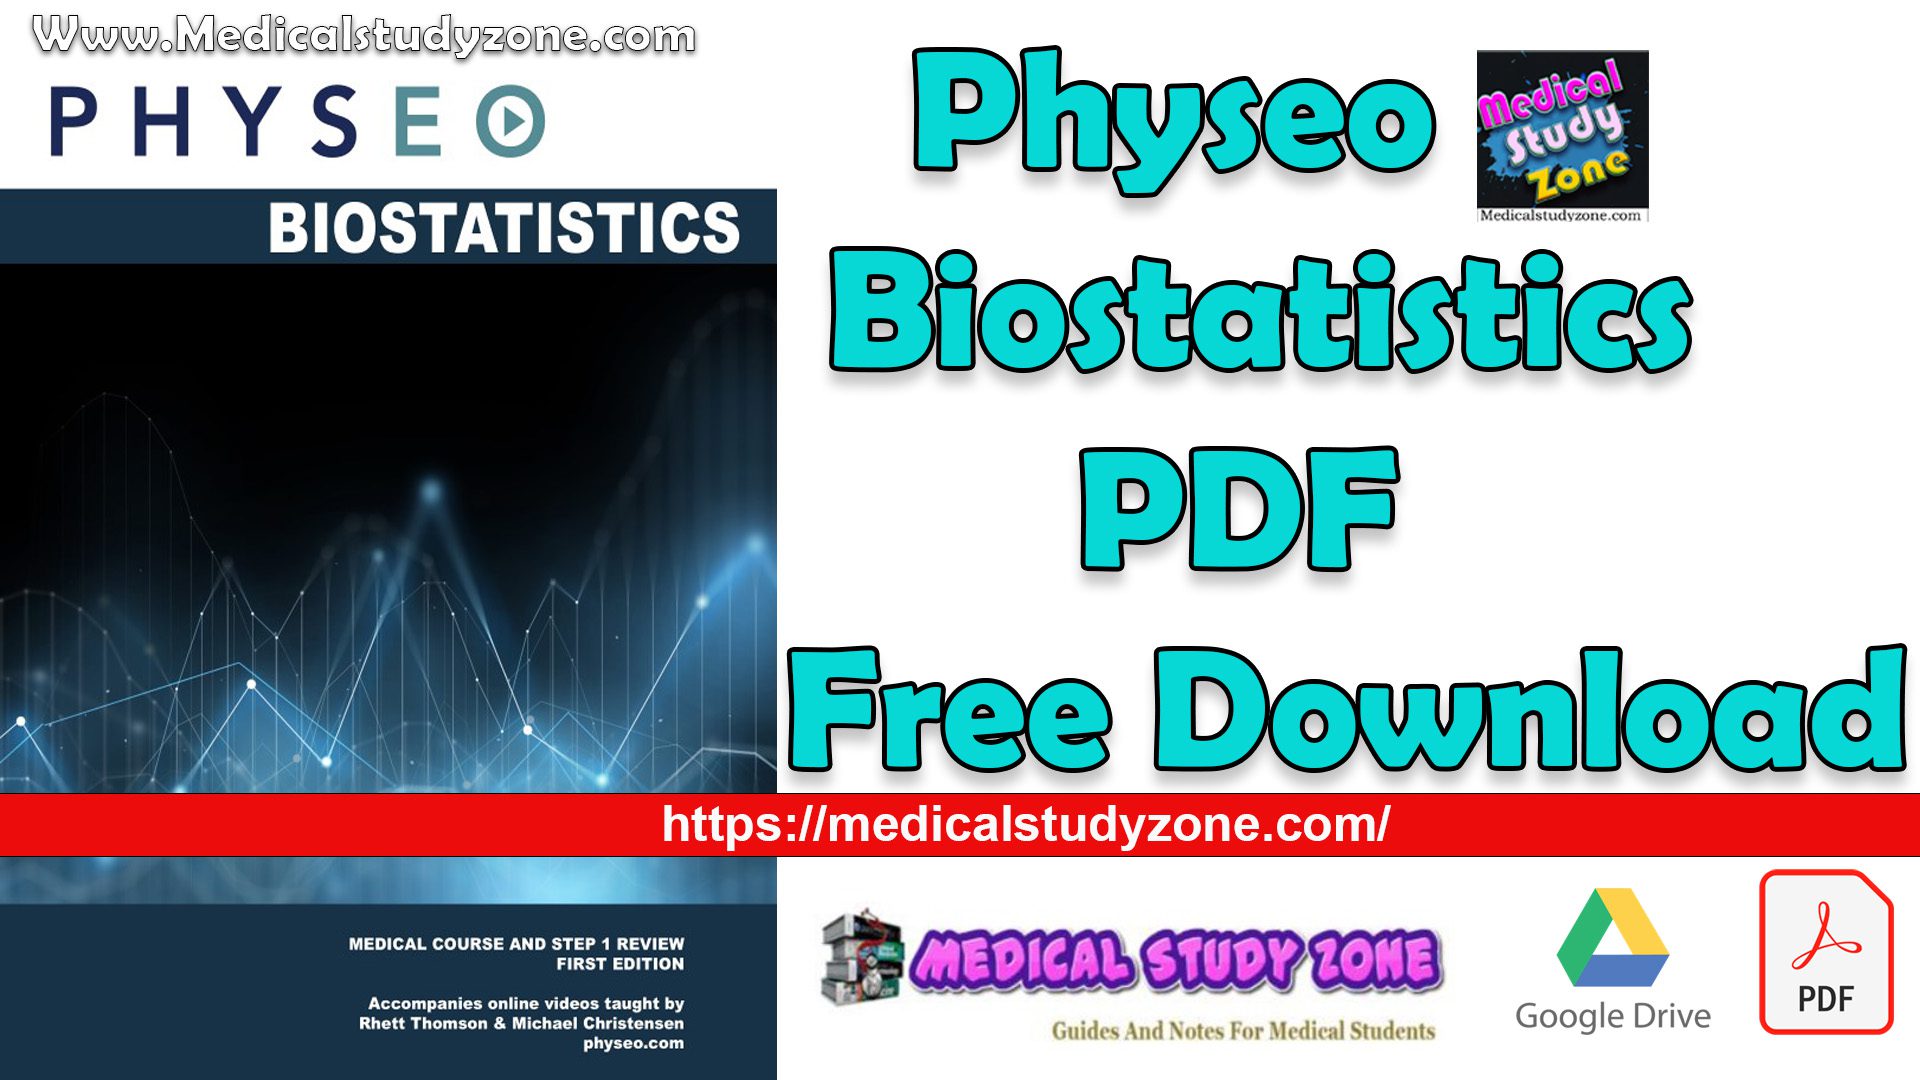 Physeo Biostatistics PDF Free Download